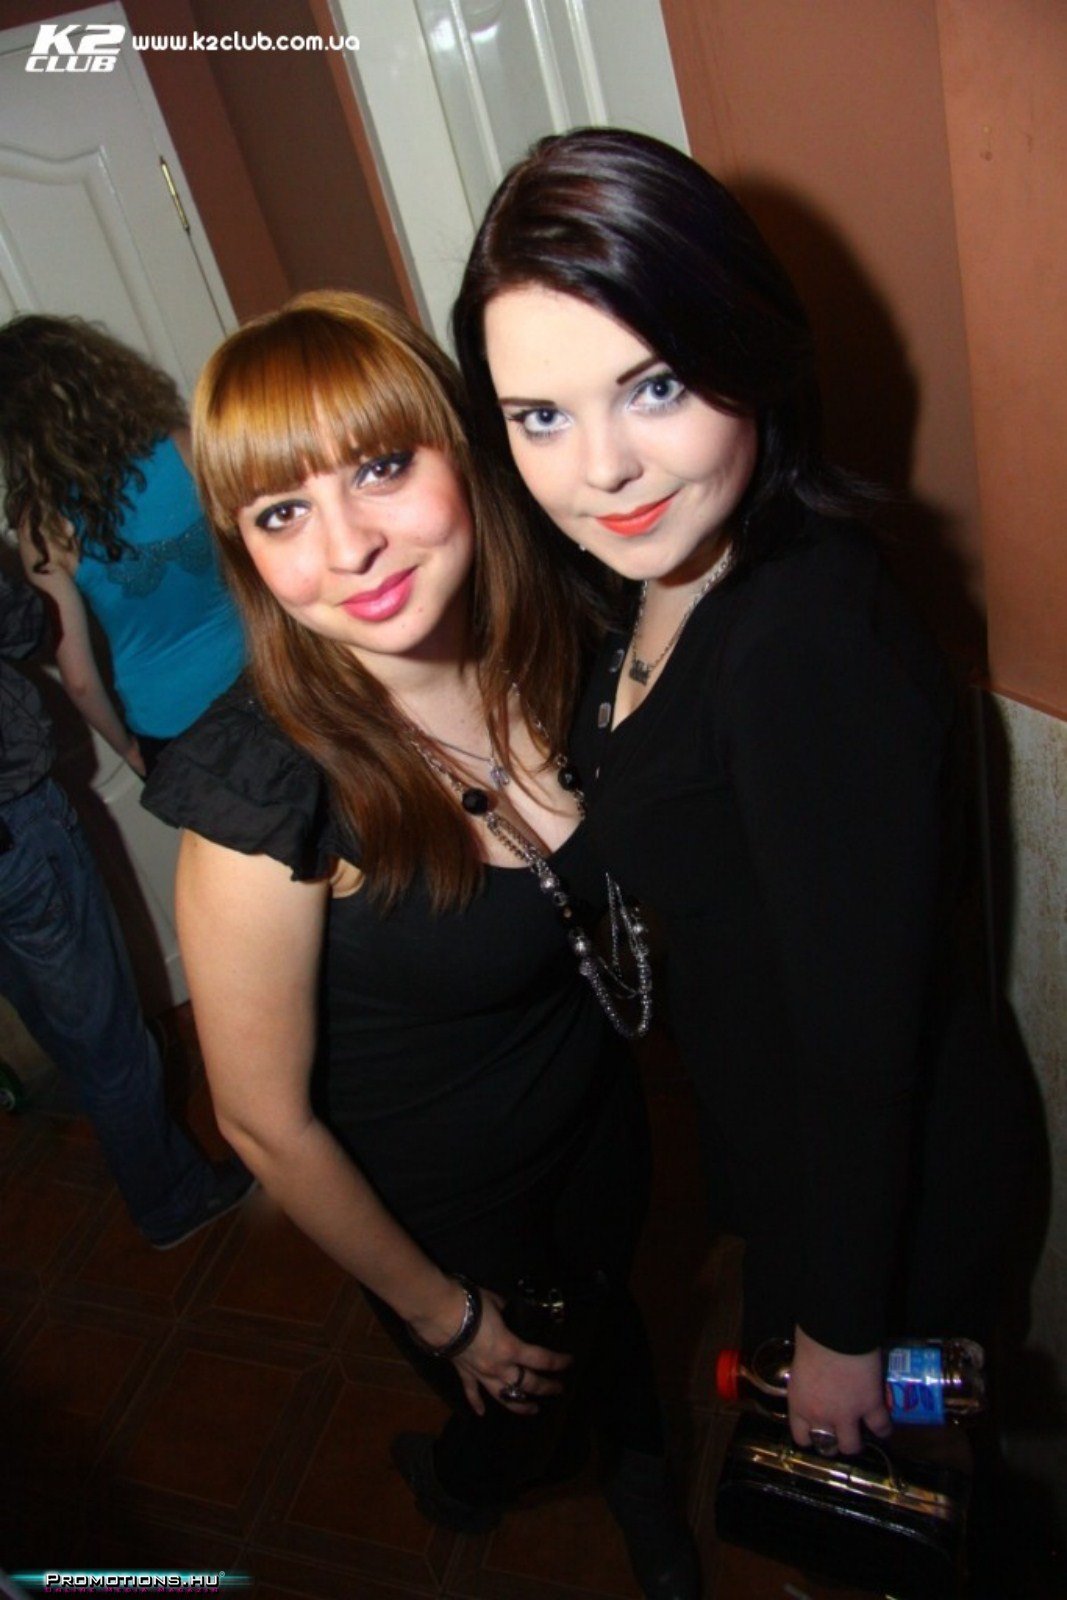 Ukrajna, Club K2 - 2012. március 8., Csütörtök